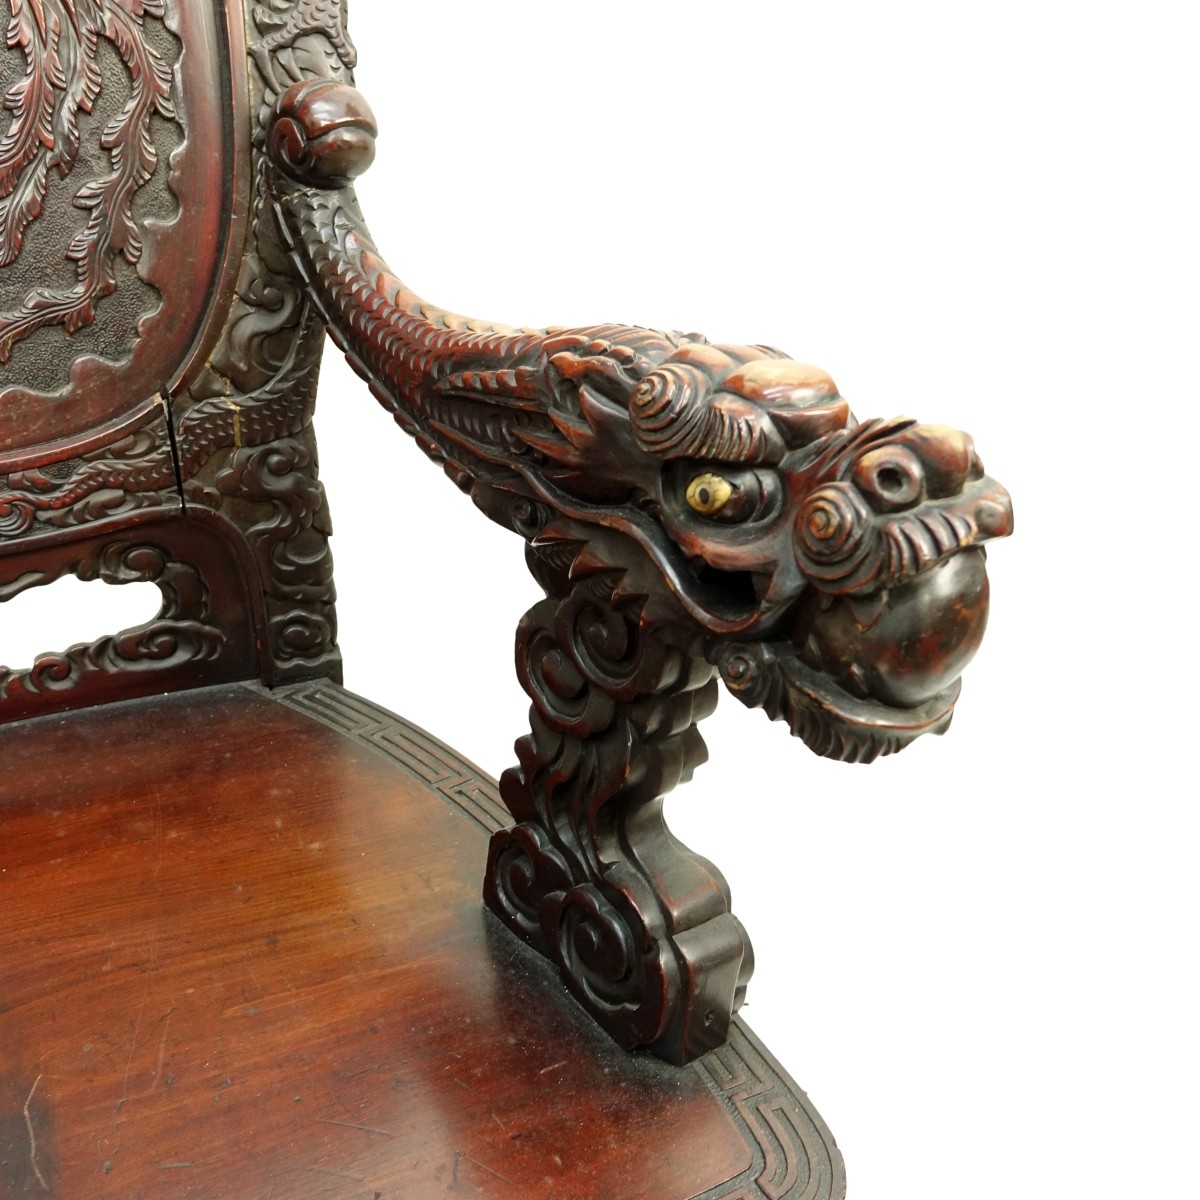 Chinese Throne Chair